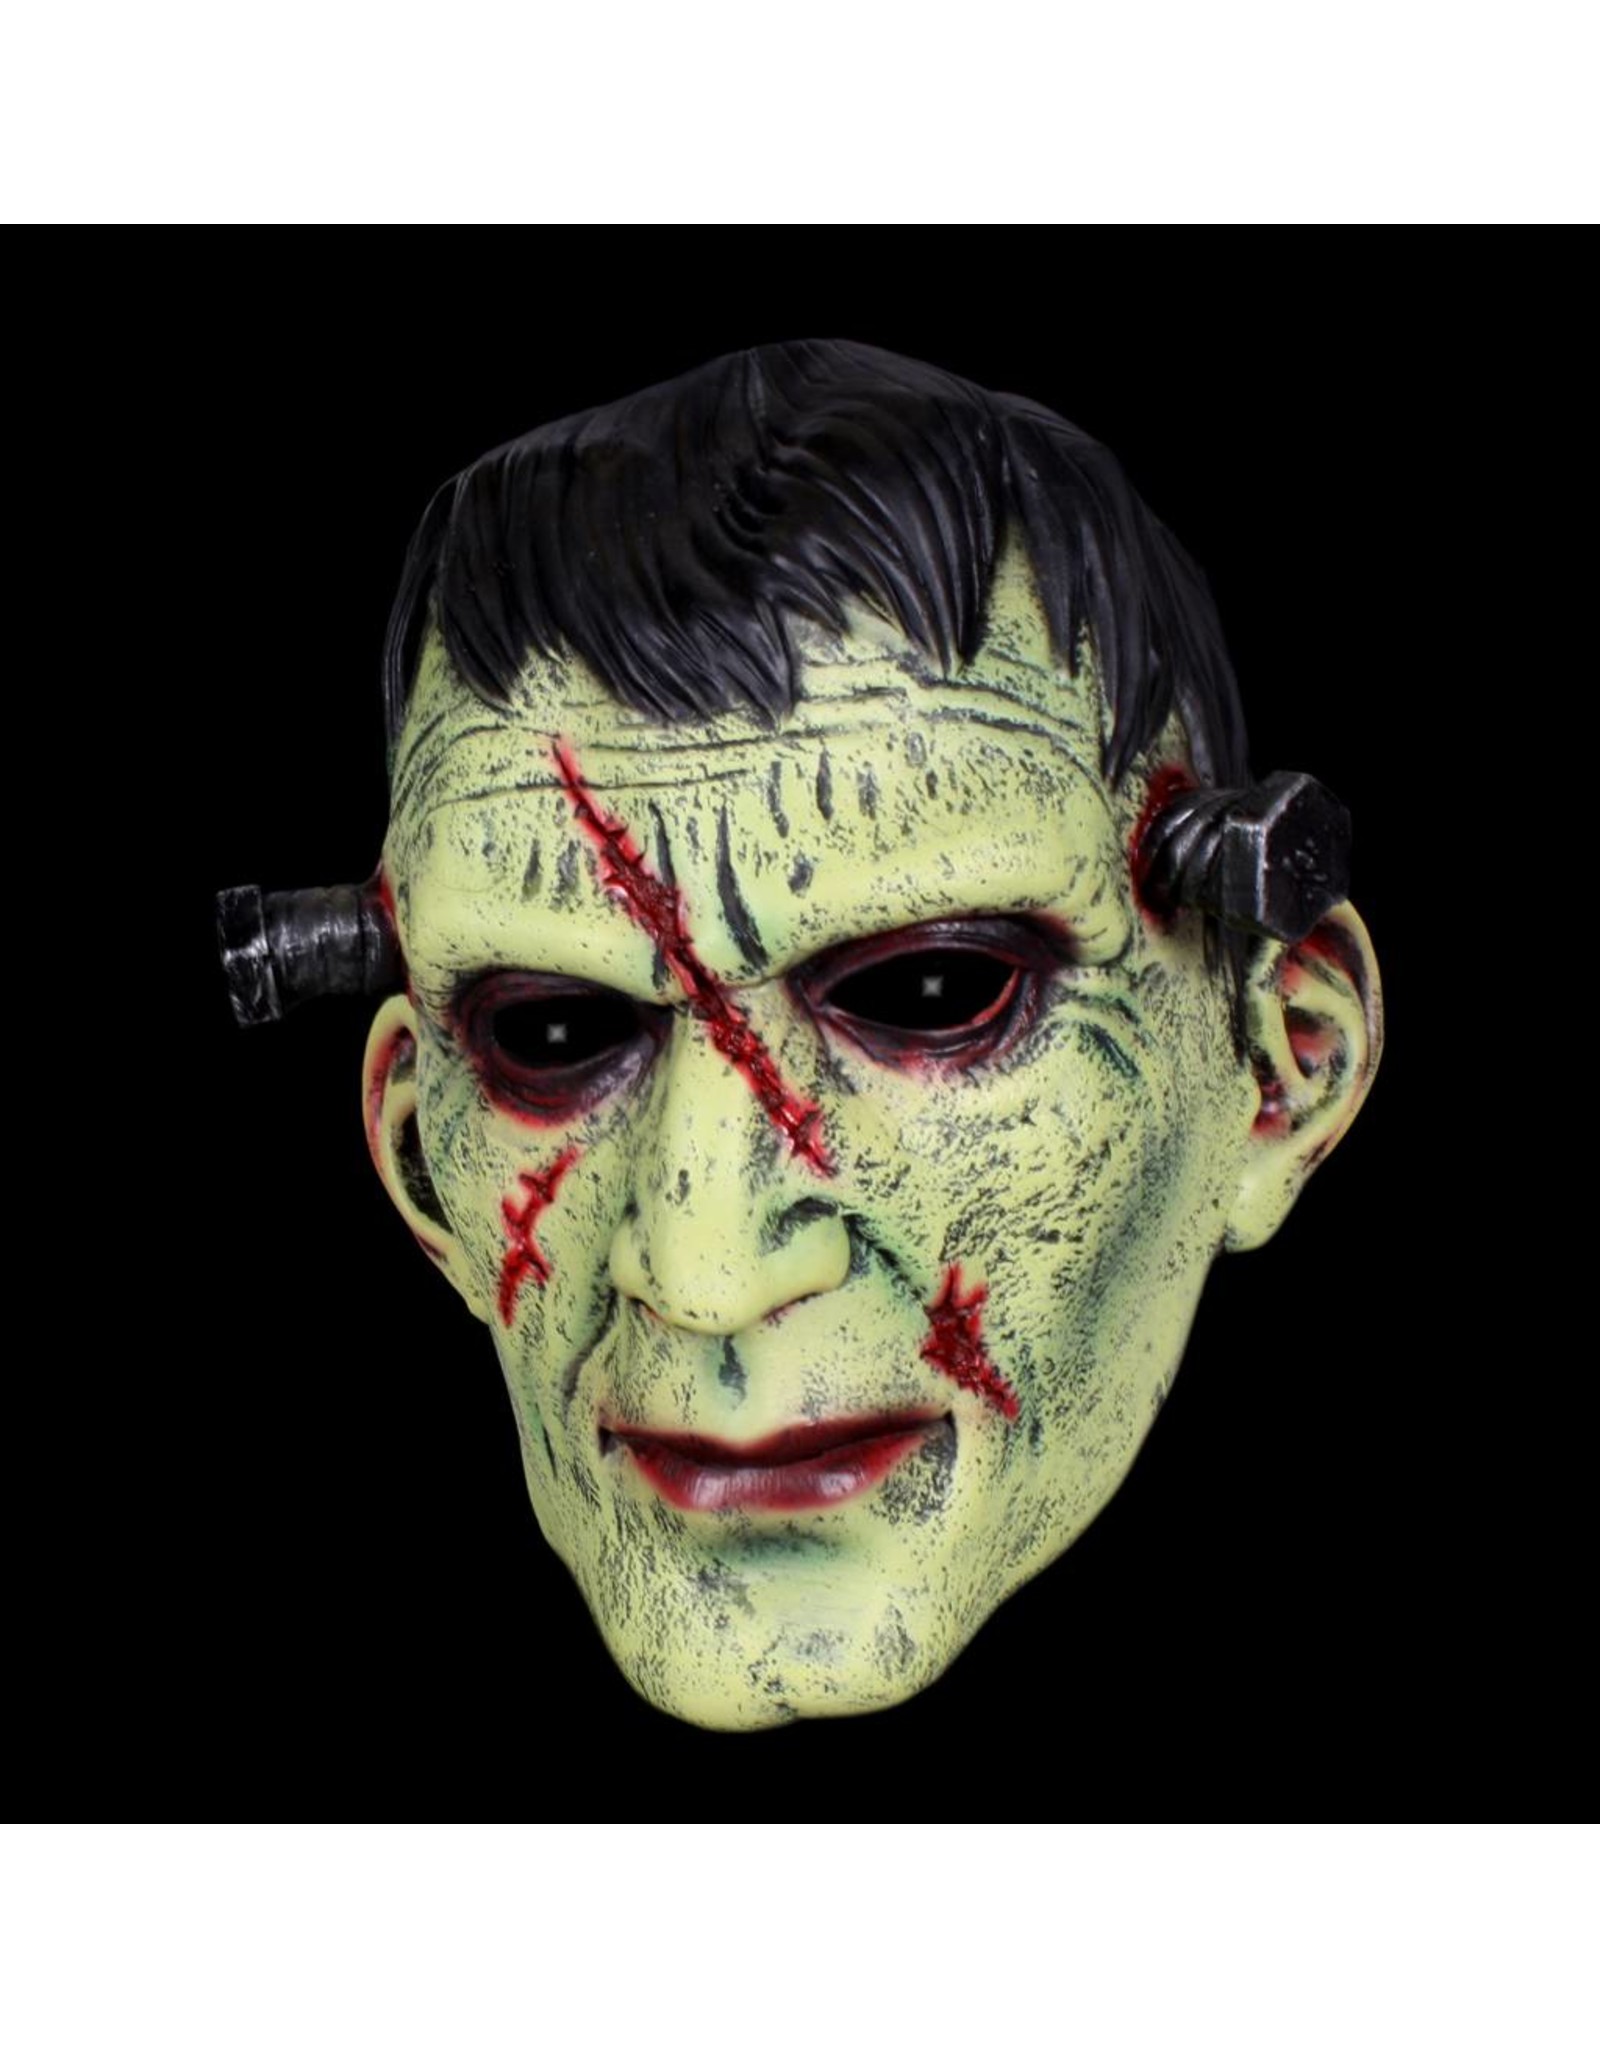 Frankenstein masker